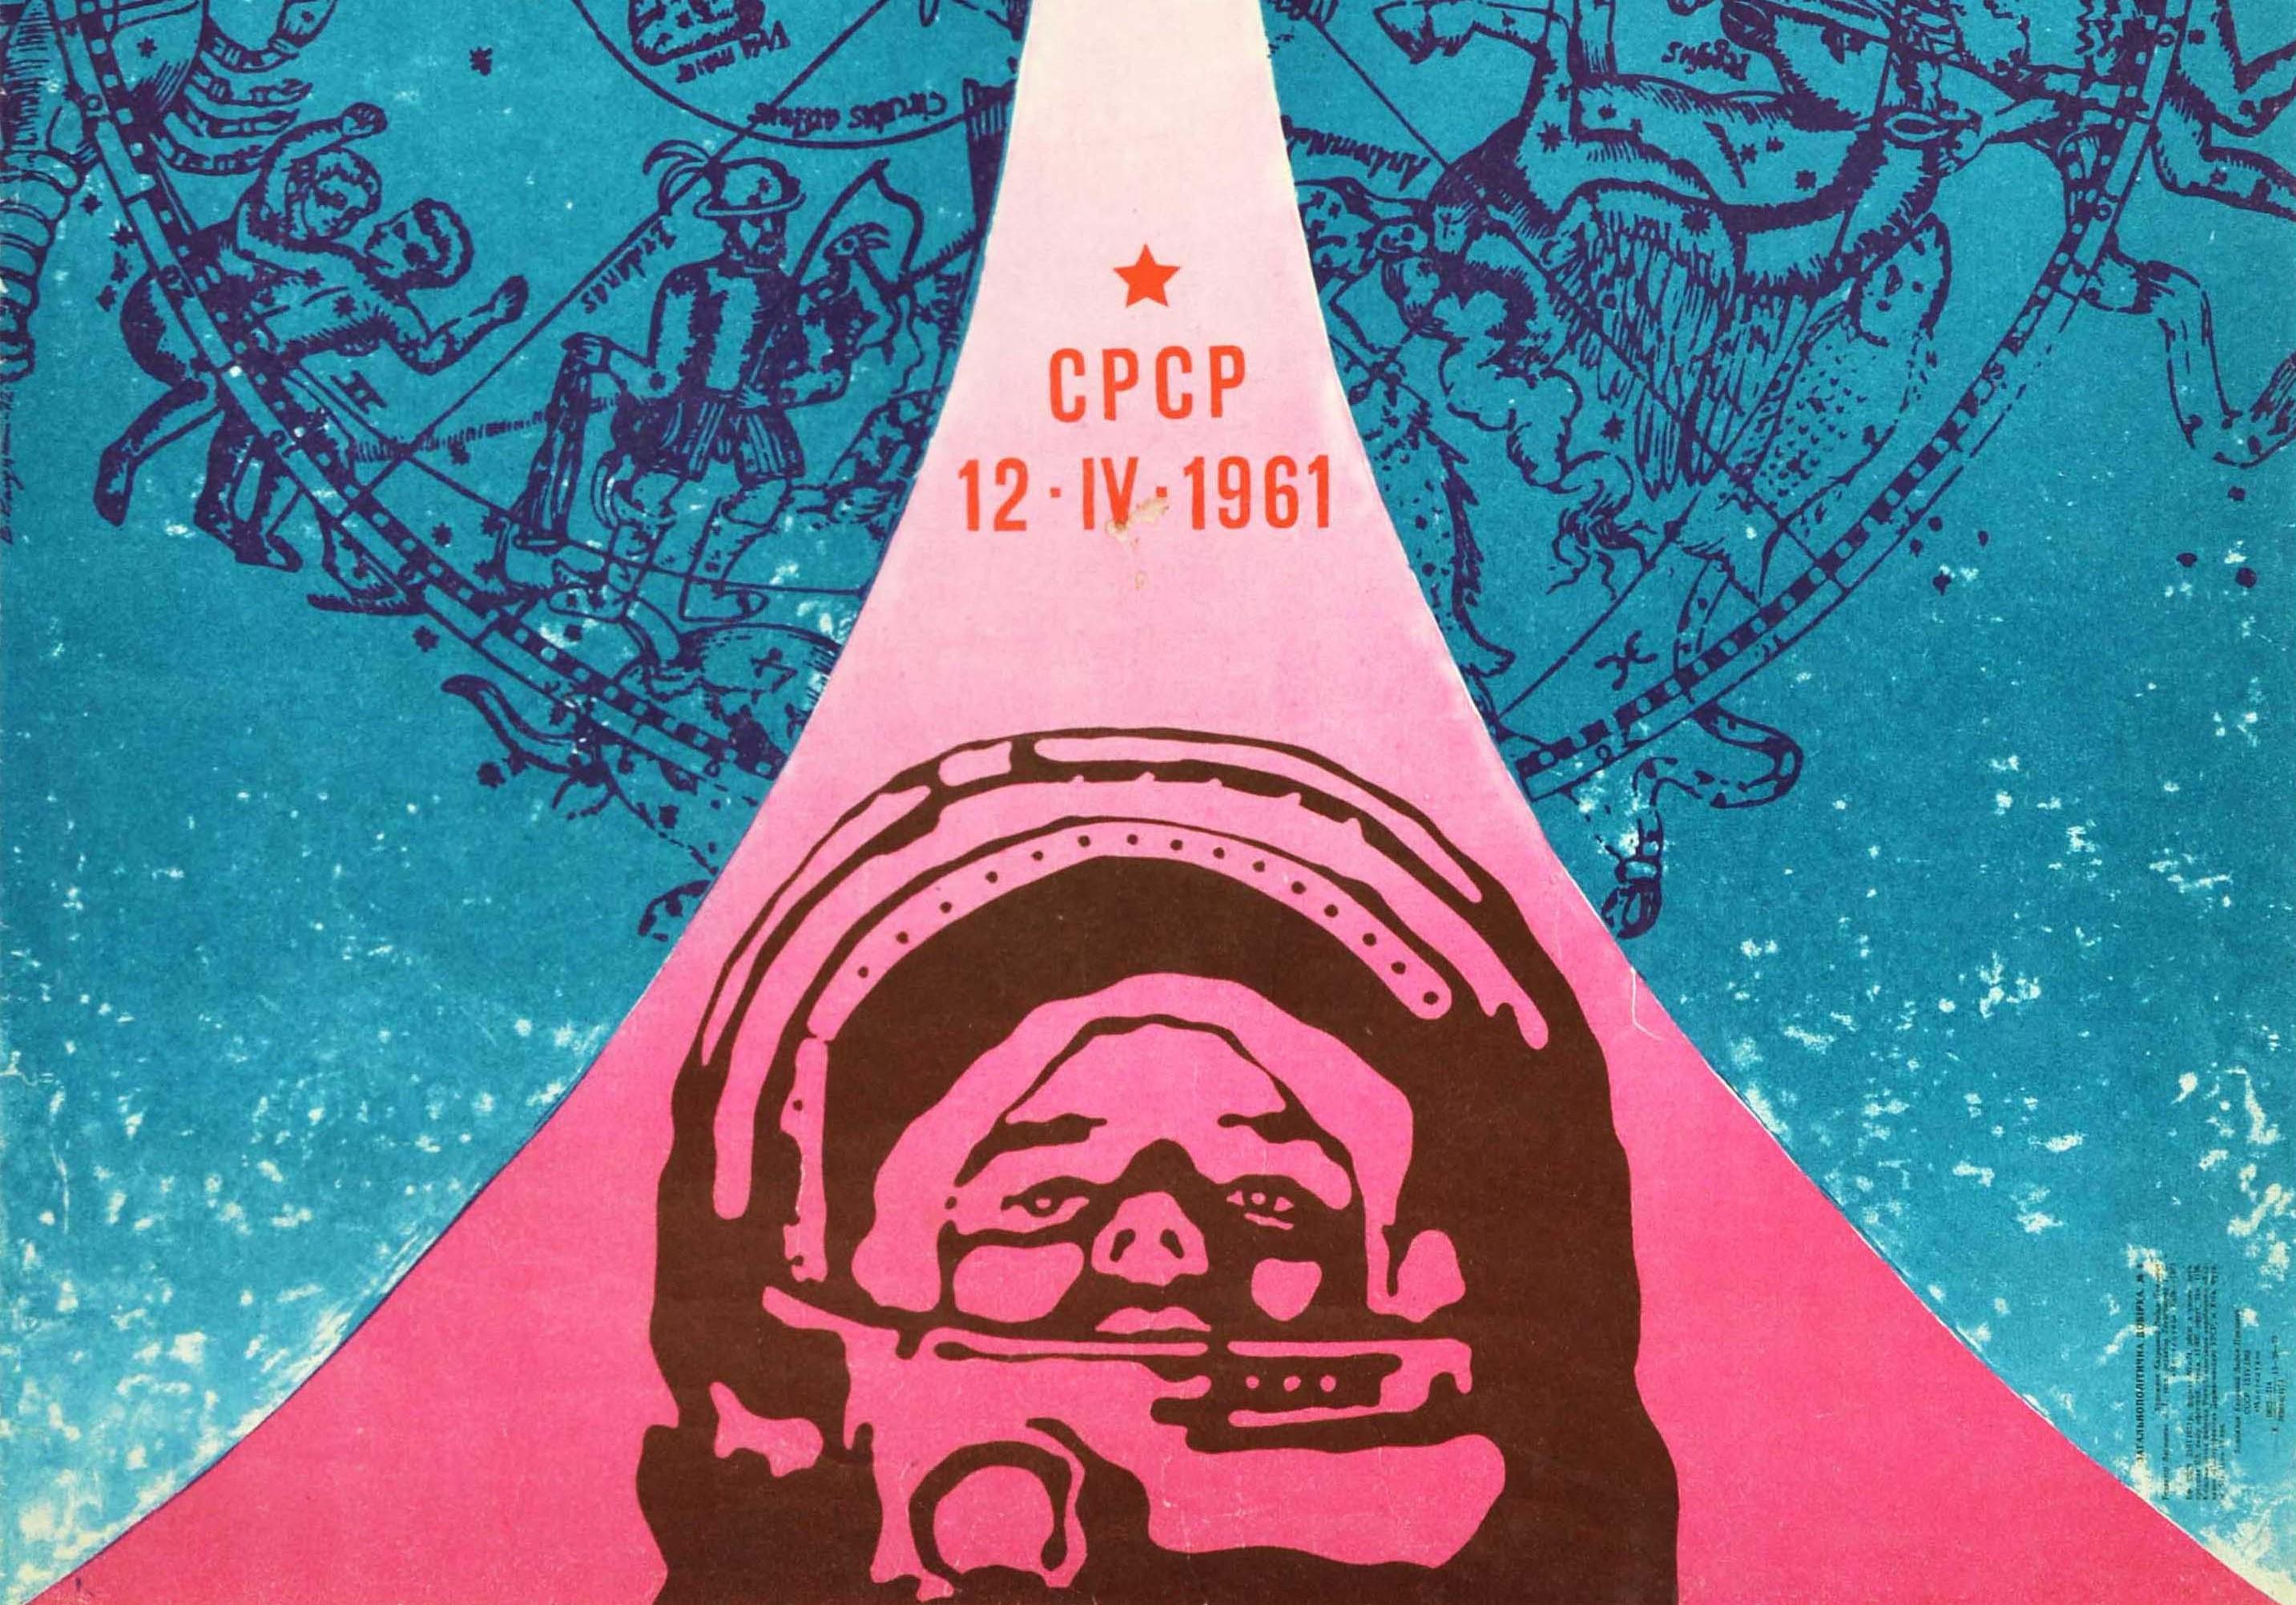 Original Vintage Space Poster Gagarin 12 IV 1961 Astronomy Constellation Design - Blue Print by Kudryashova